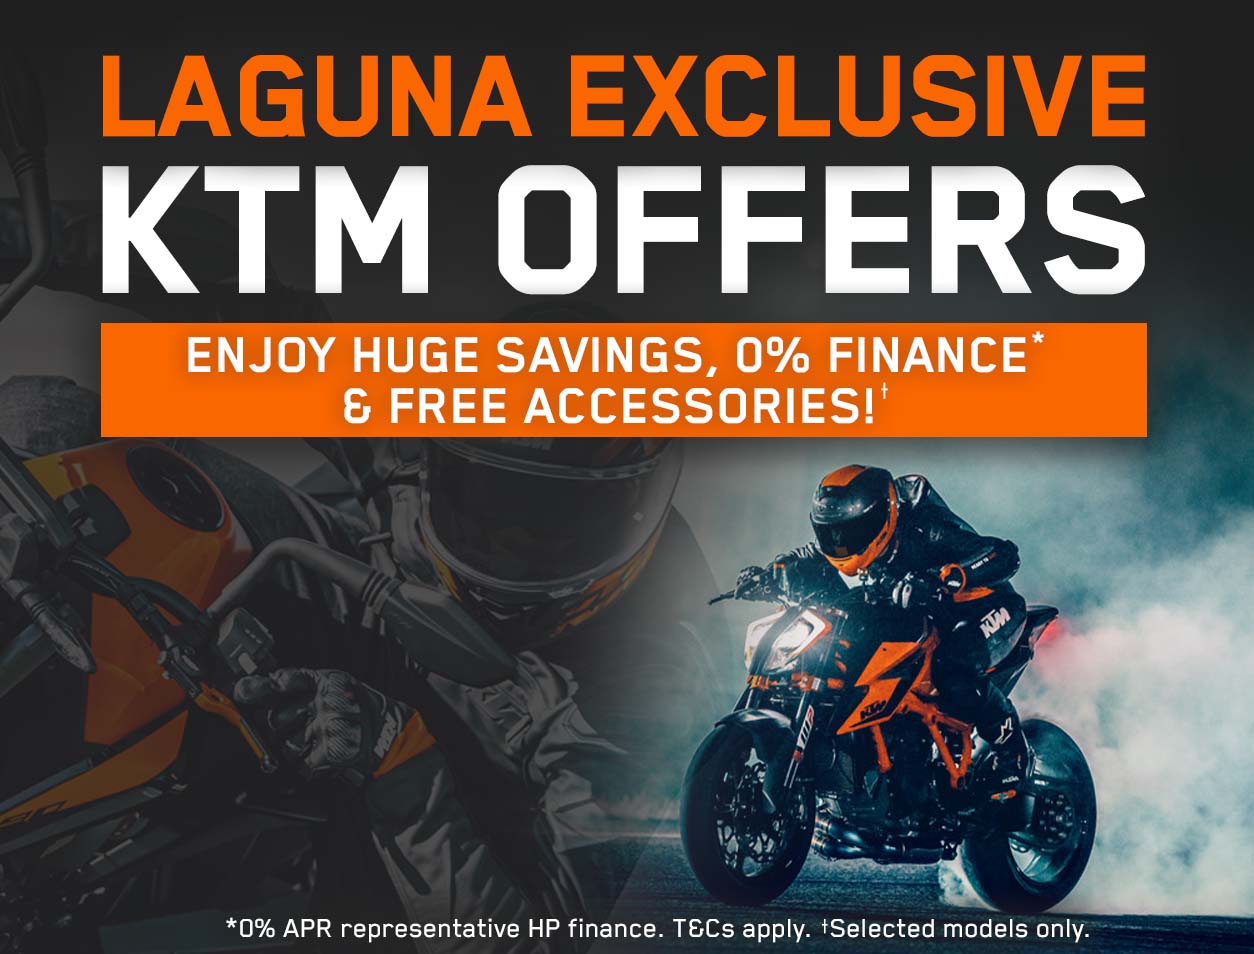 Laguna KTM exclusive savings and free accessories